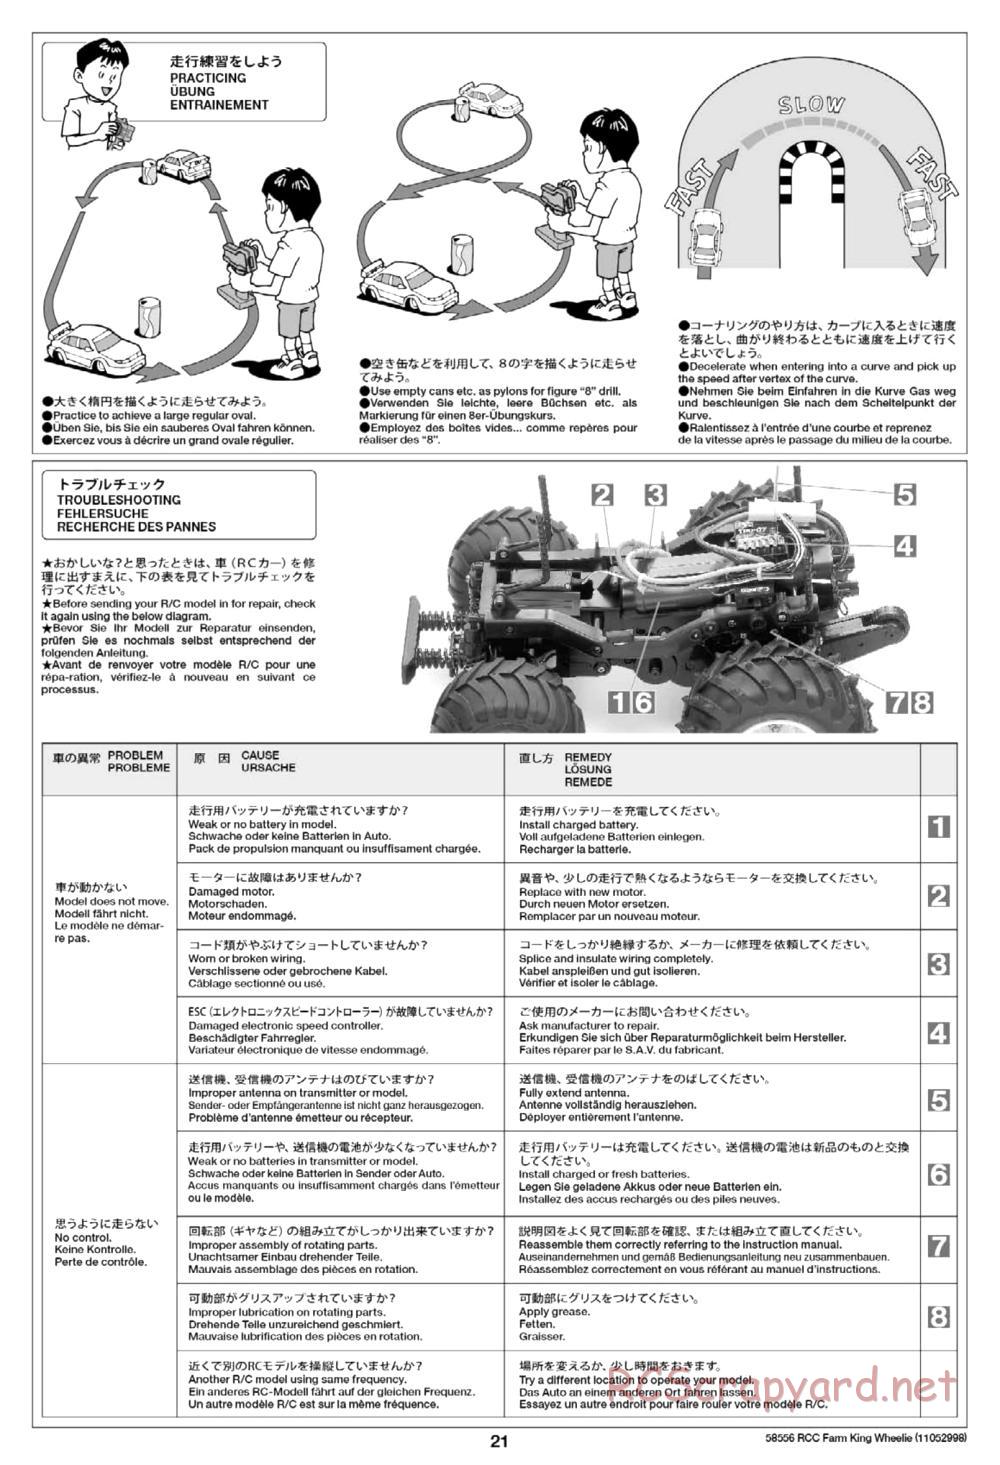 Tamiya - Farm King Wheelie Chassis - Manual - Page 21